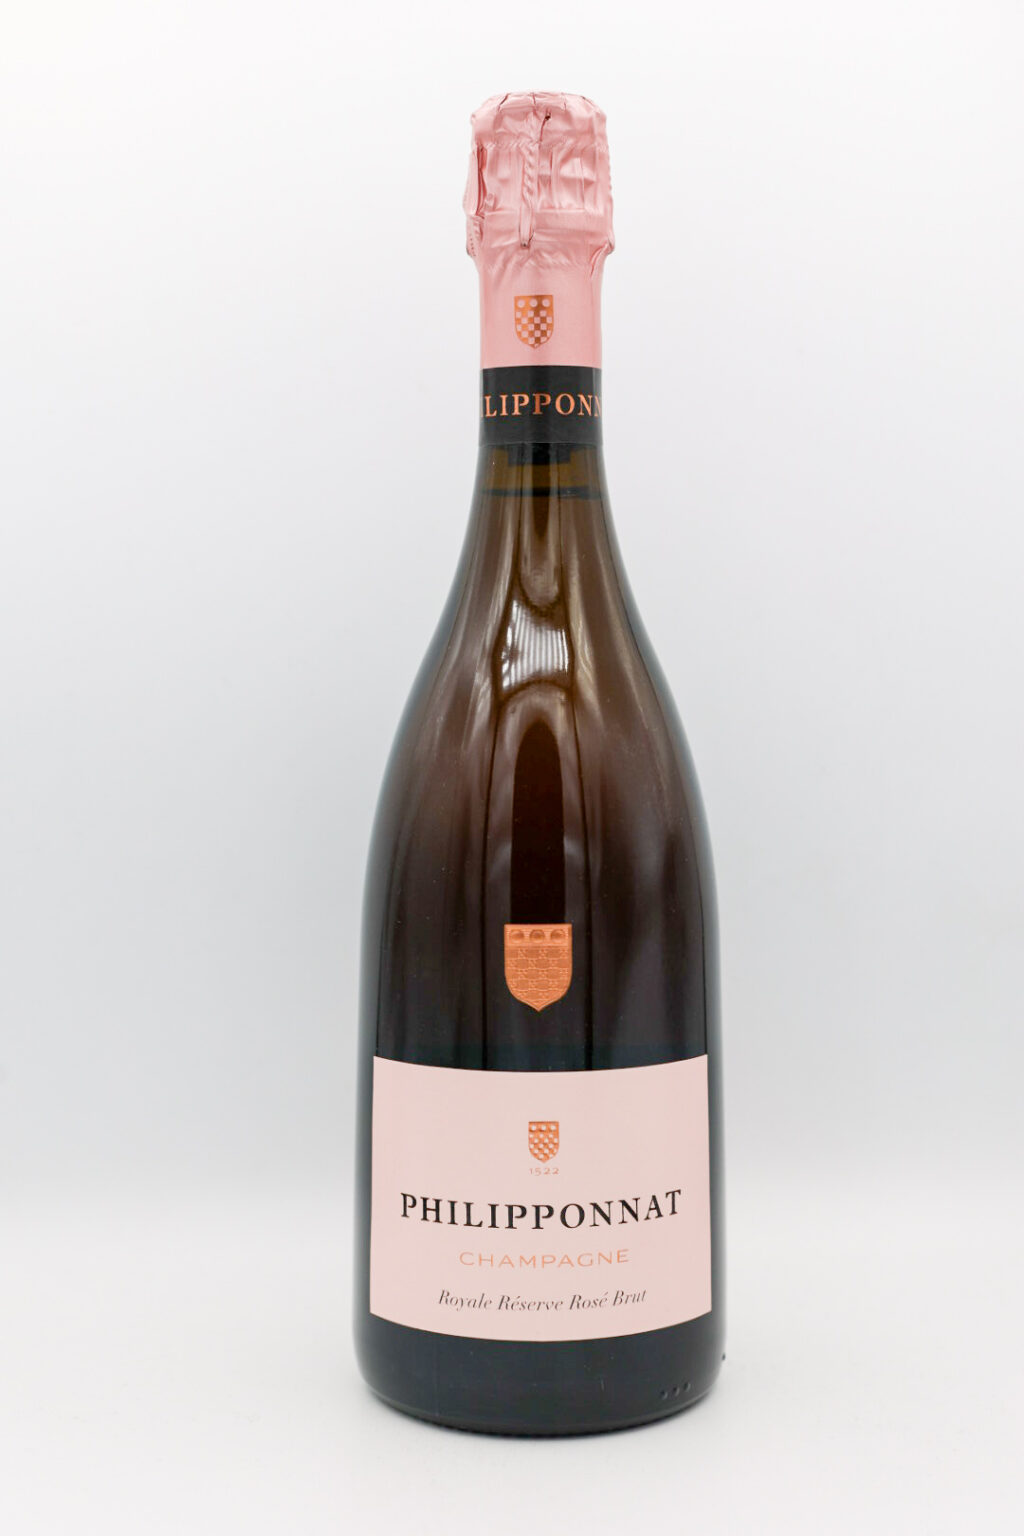 Philipponnat Champagne Royale Reserve Brut Rose